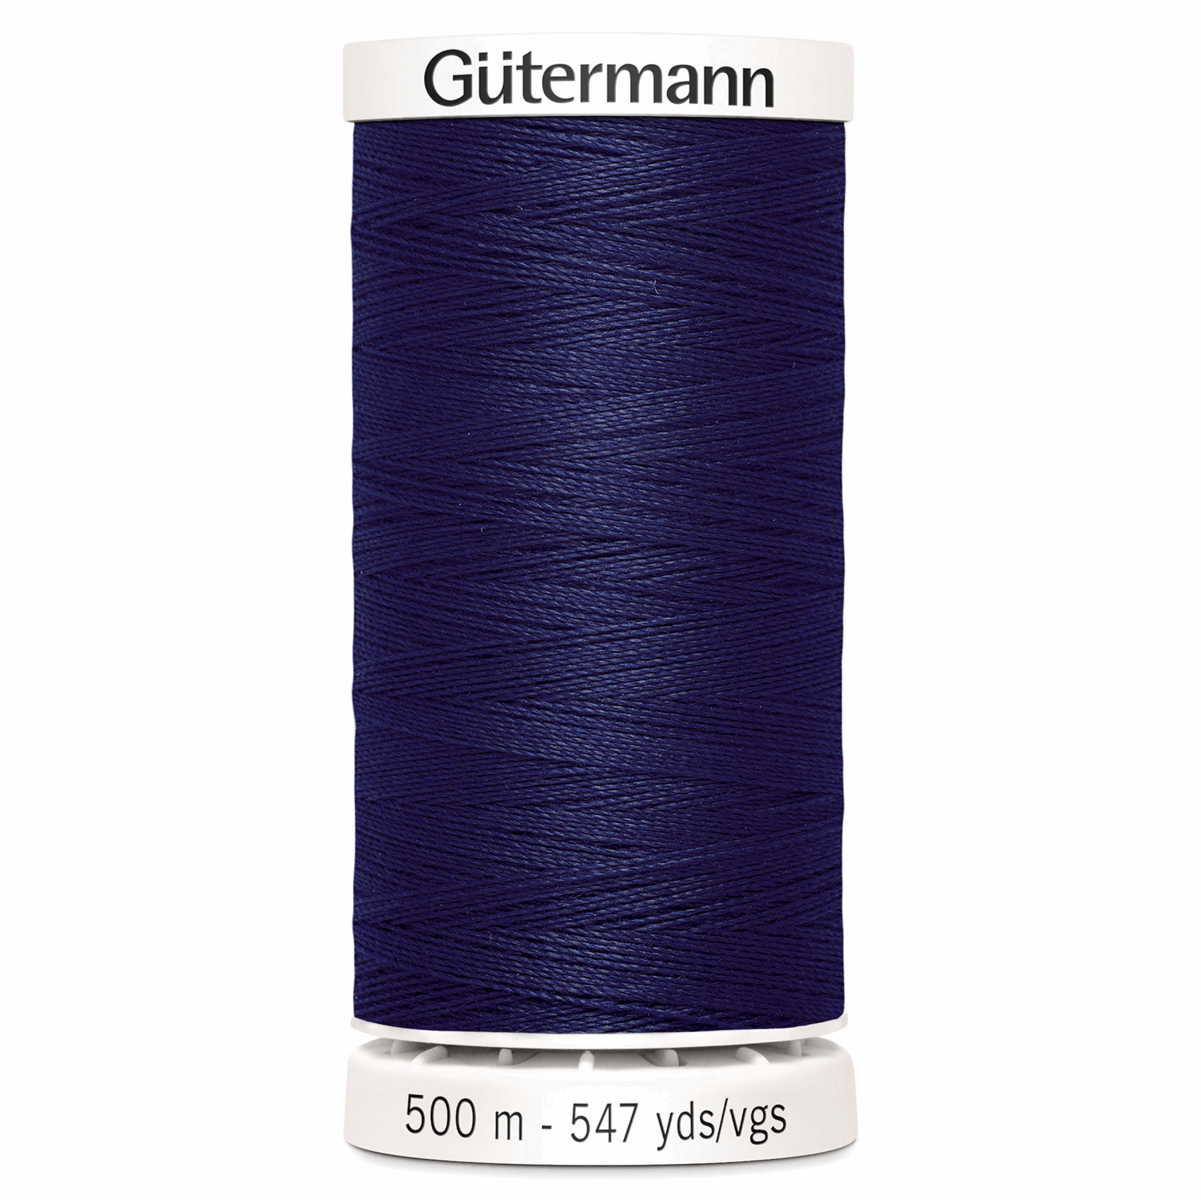 Gutermann Sew-All Thread 500m - Navy Blue (#310)